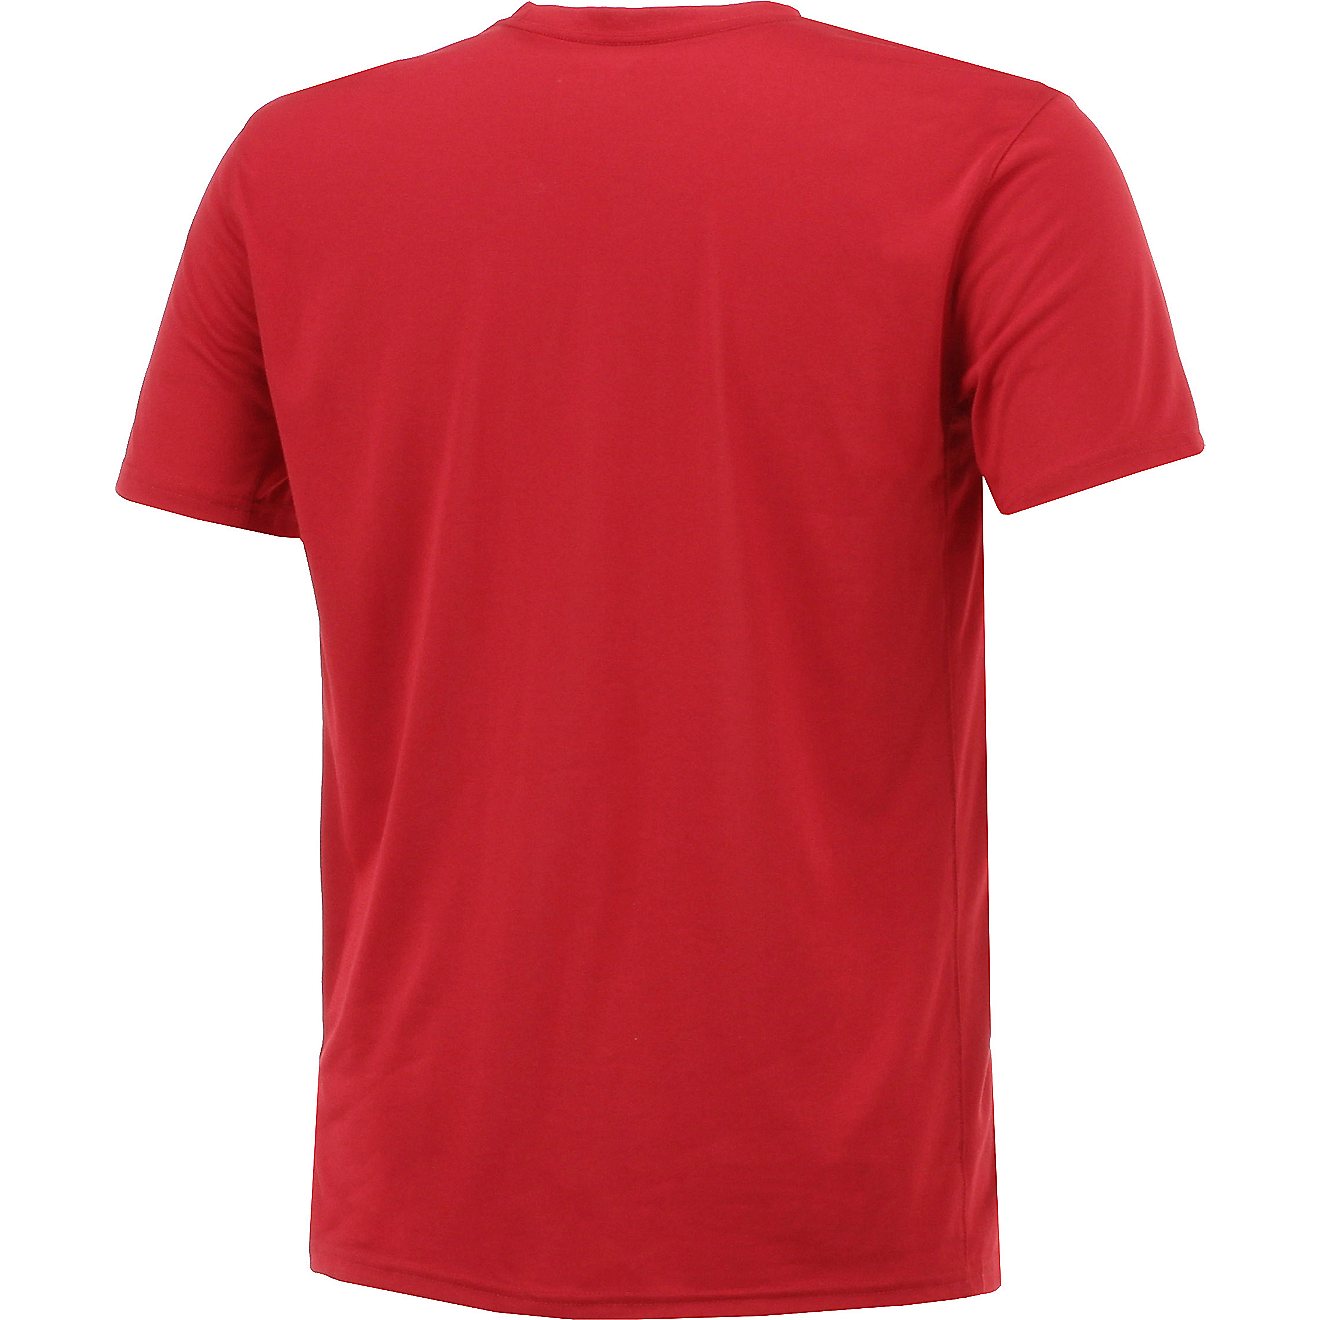 Nike Men's Legend 2.0 Short Sleeve T-shirt                                                                                       - view number 4